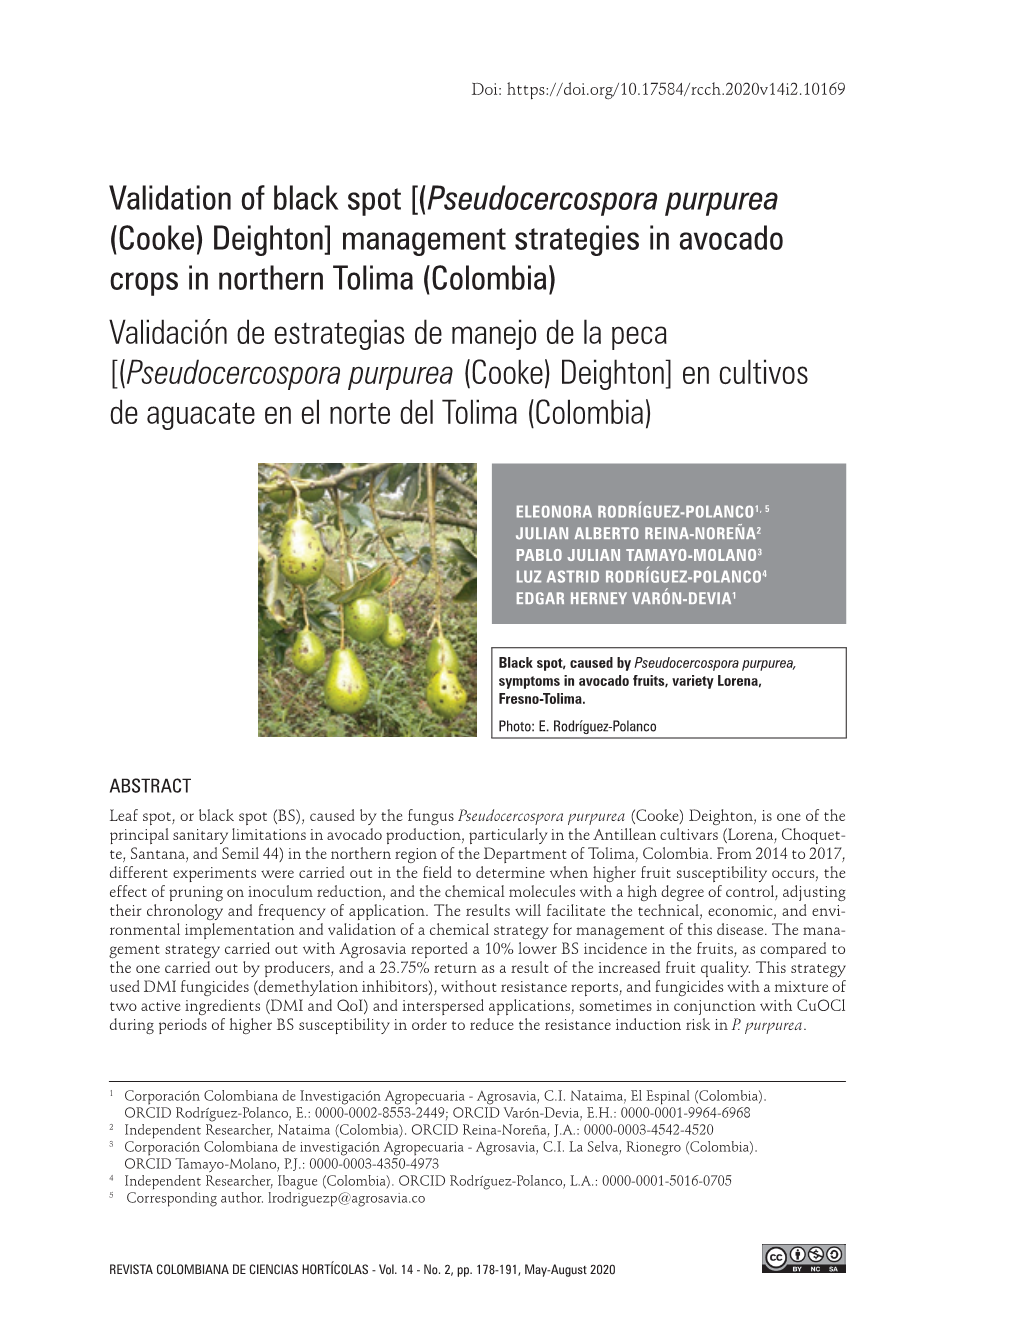 [(Pseudocercospora Purpurea (Cooke) Deighton] Management Strategies in Avocado Crops in Northern Tolima